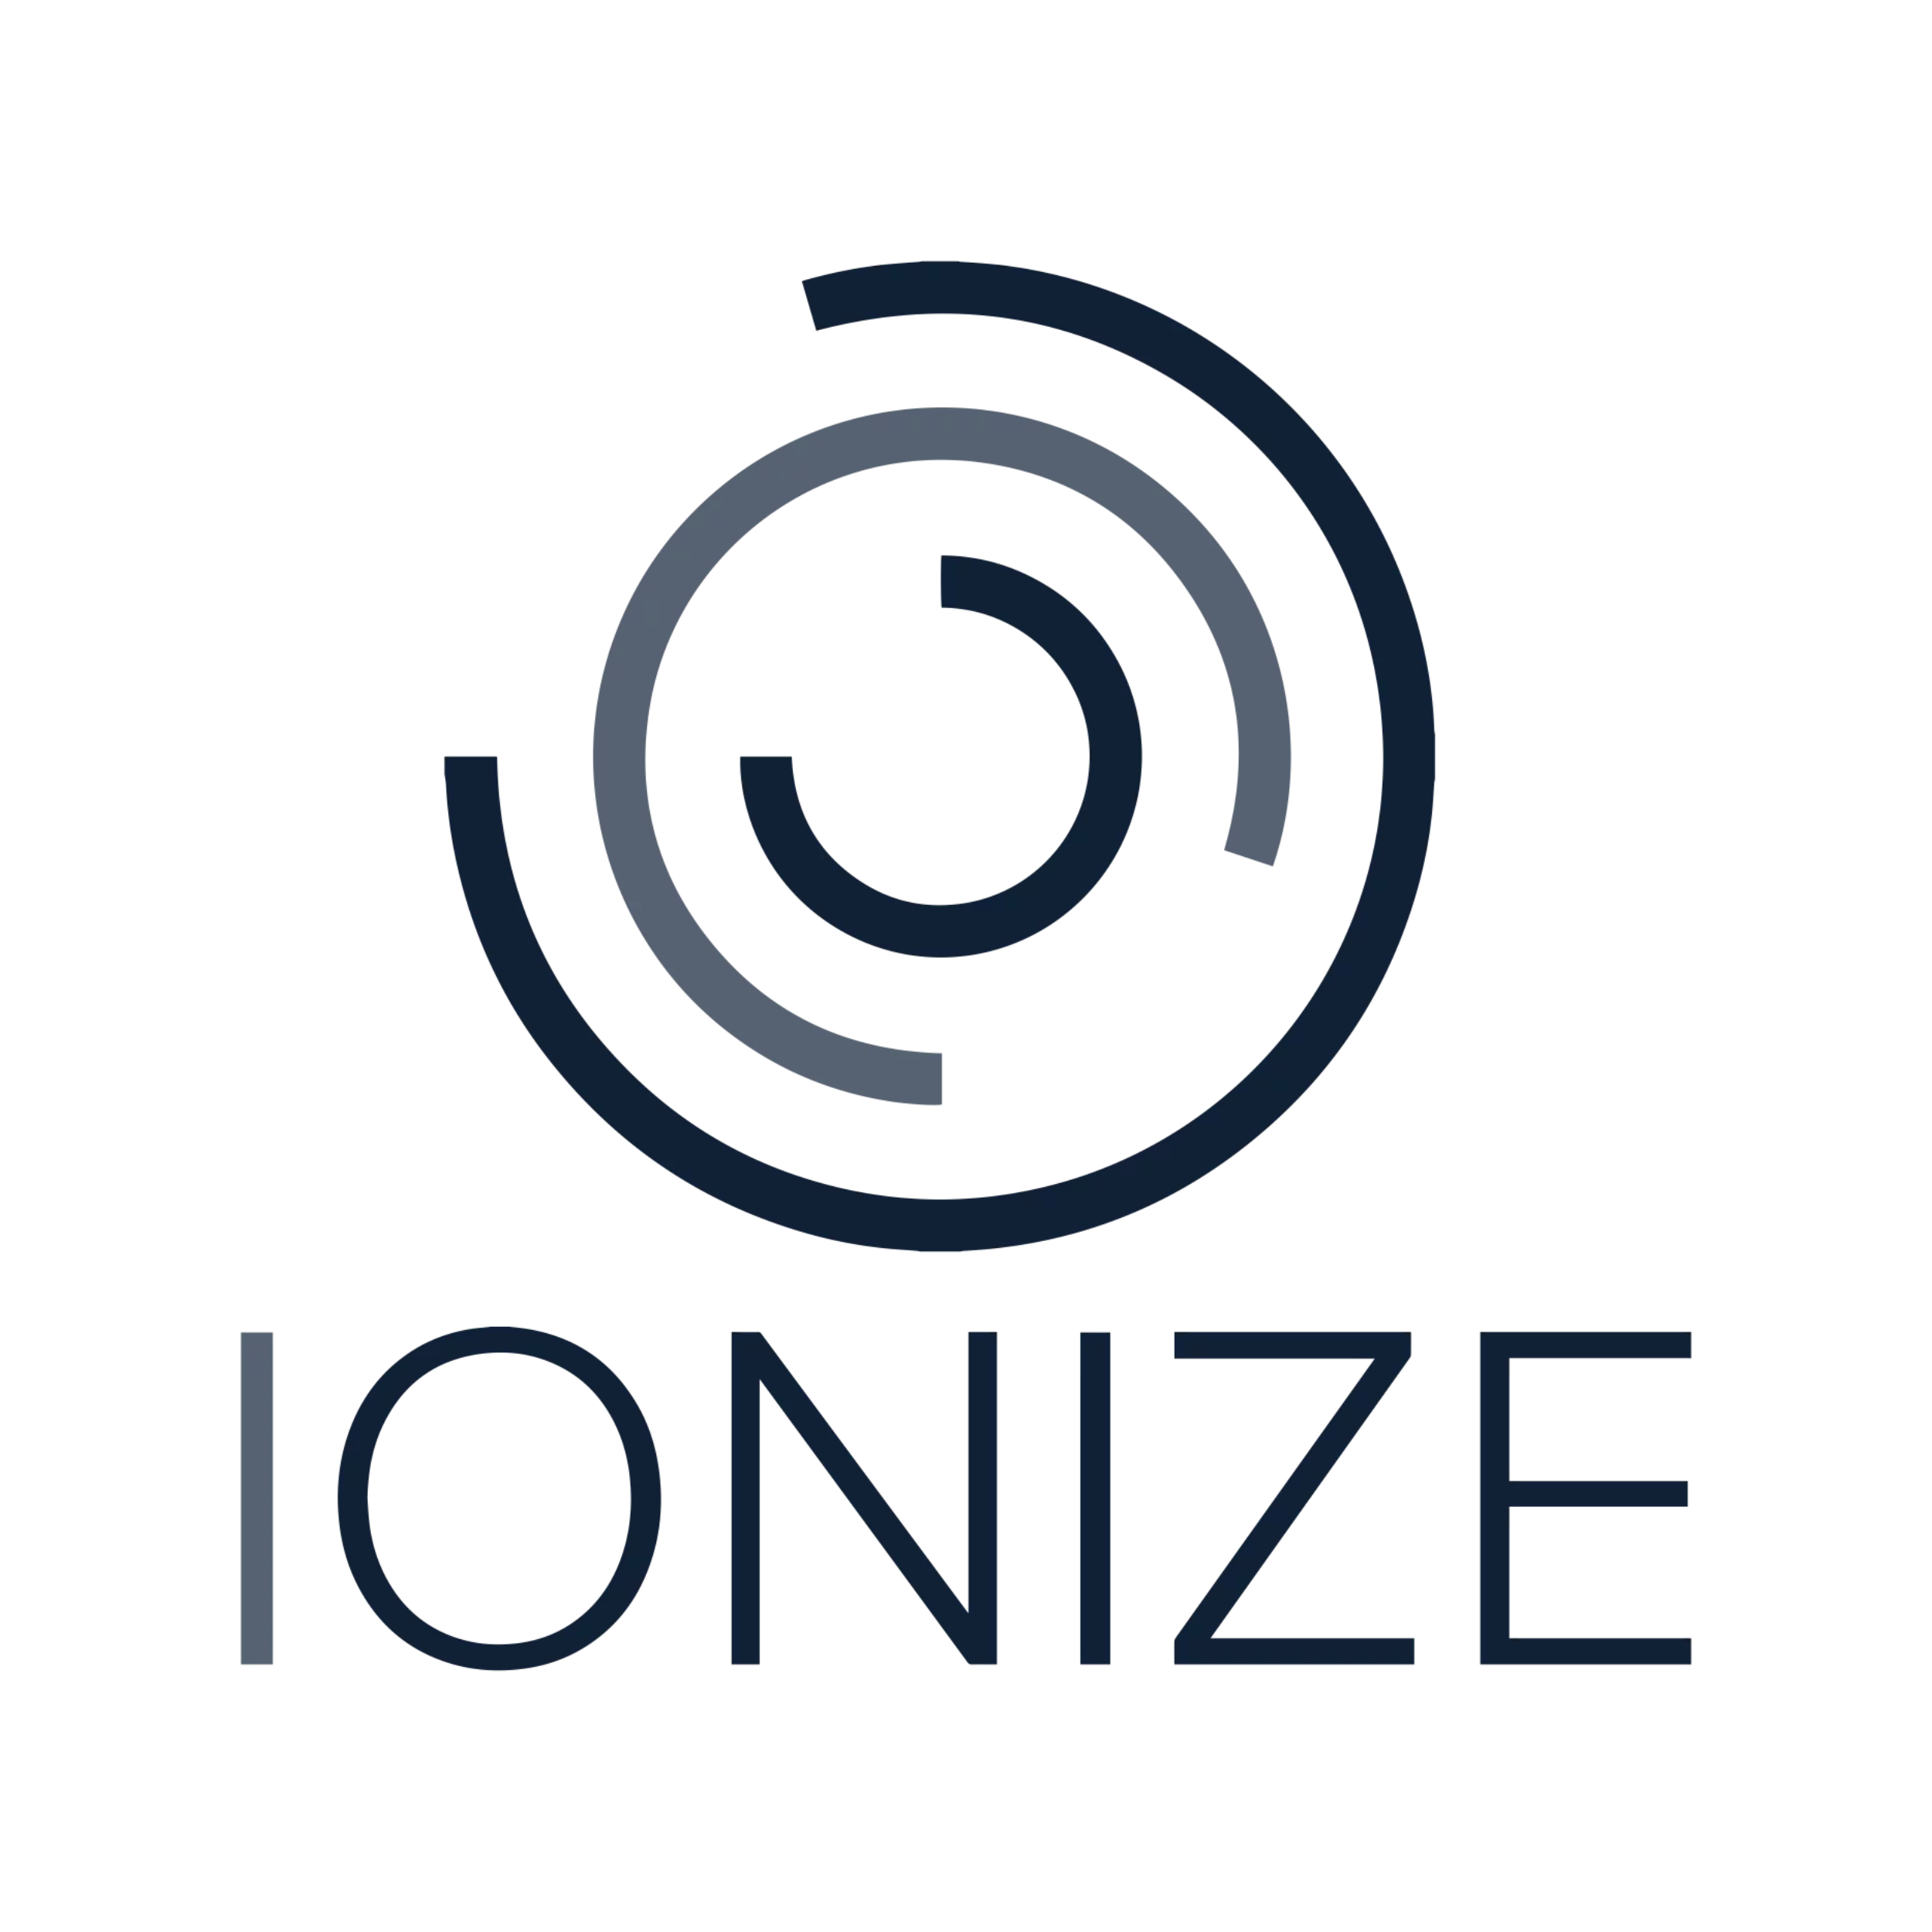 Ionize : Brand Short Description Type Here.